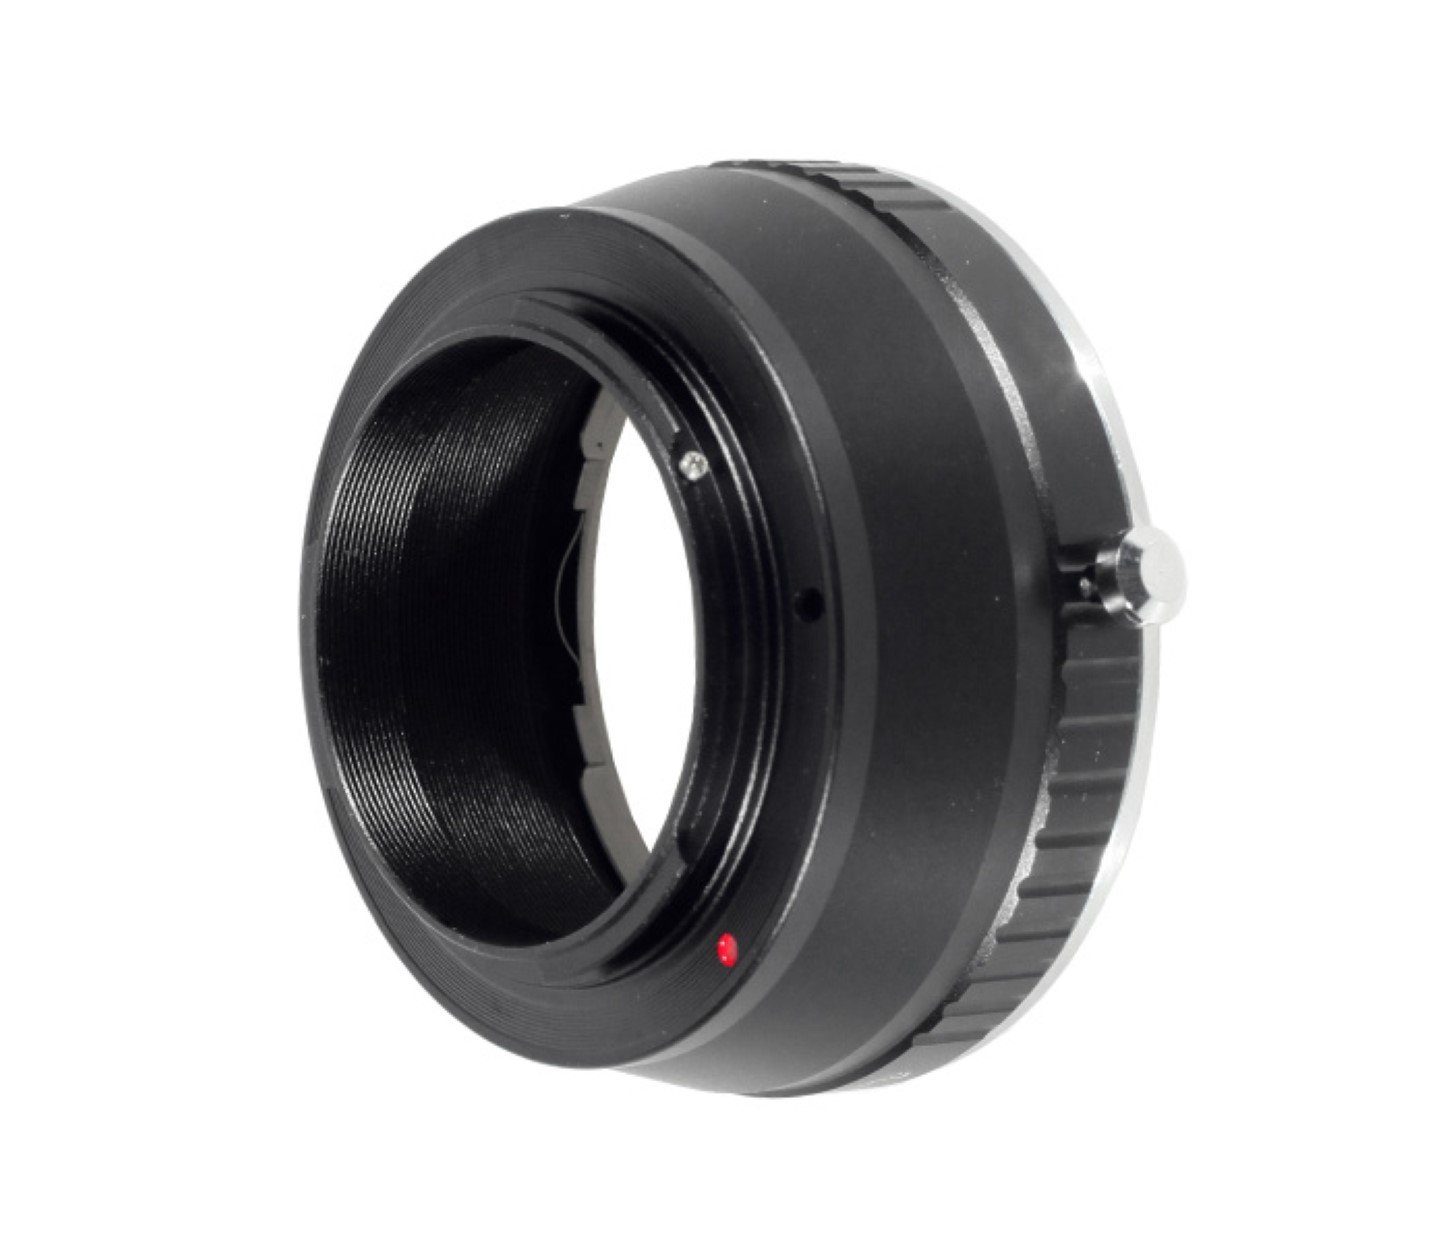 Kamera Adapter ayex Objektiveadapter M Canon an EOS EOS Linse für Canon EF-S